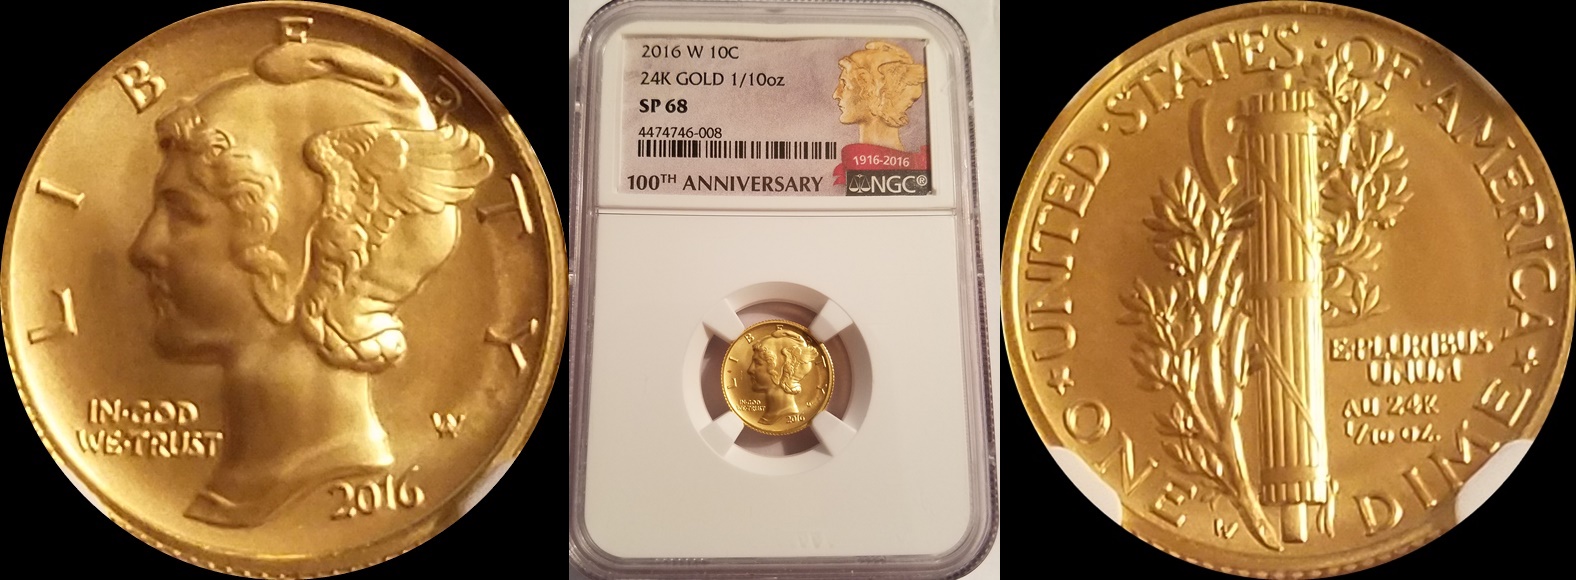 2016-W 100th Anniversary Gold A1-horz-horz.jpg